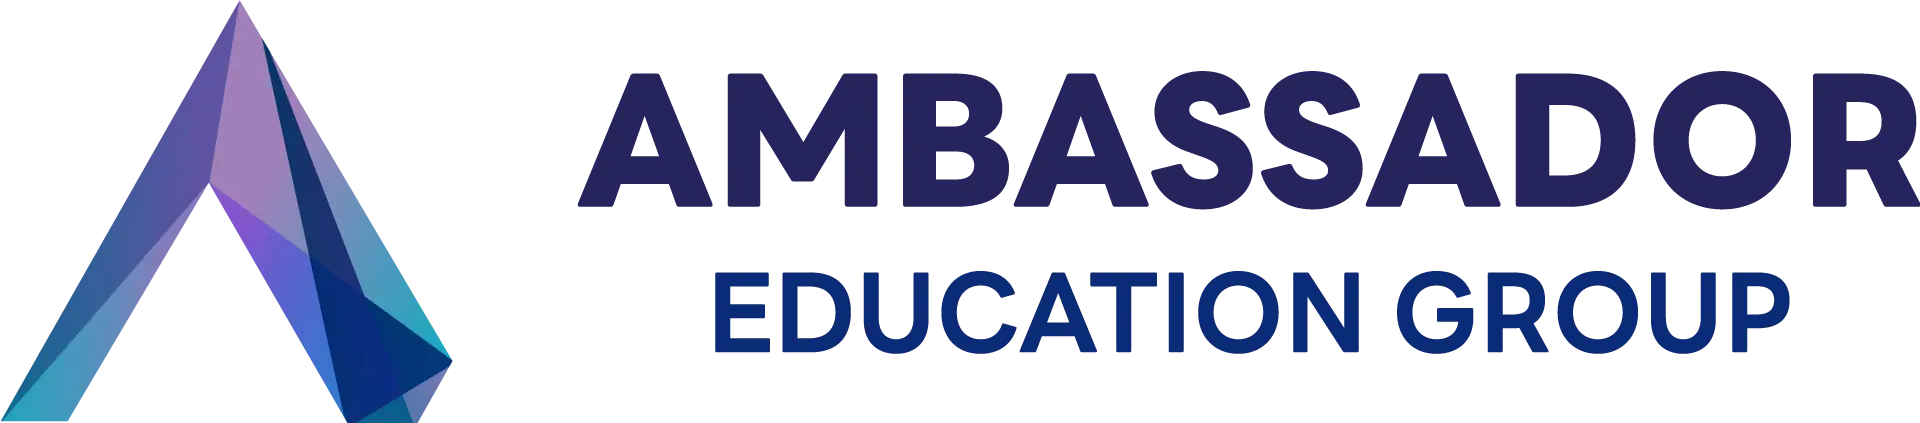 Ambassador Education Group